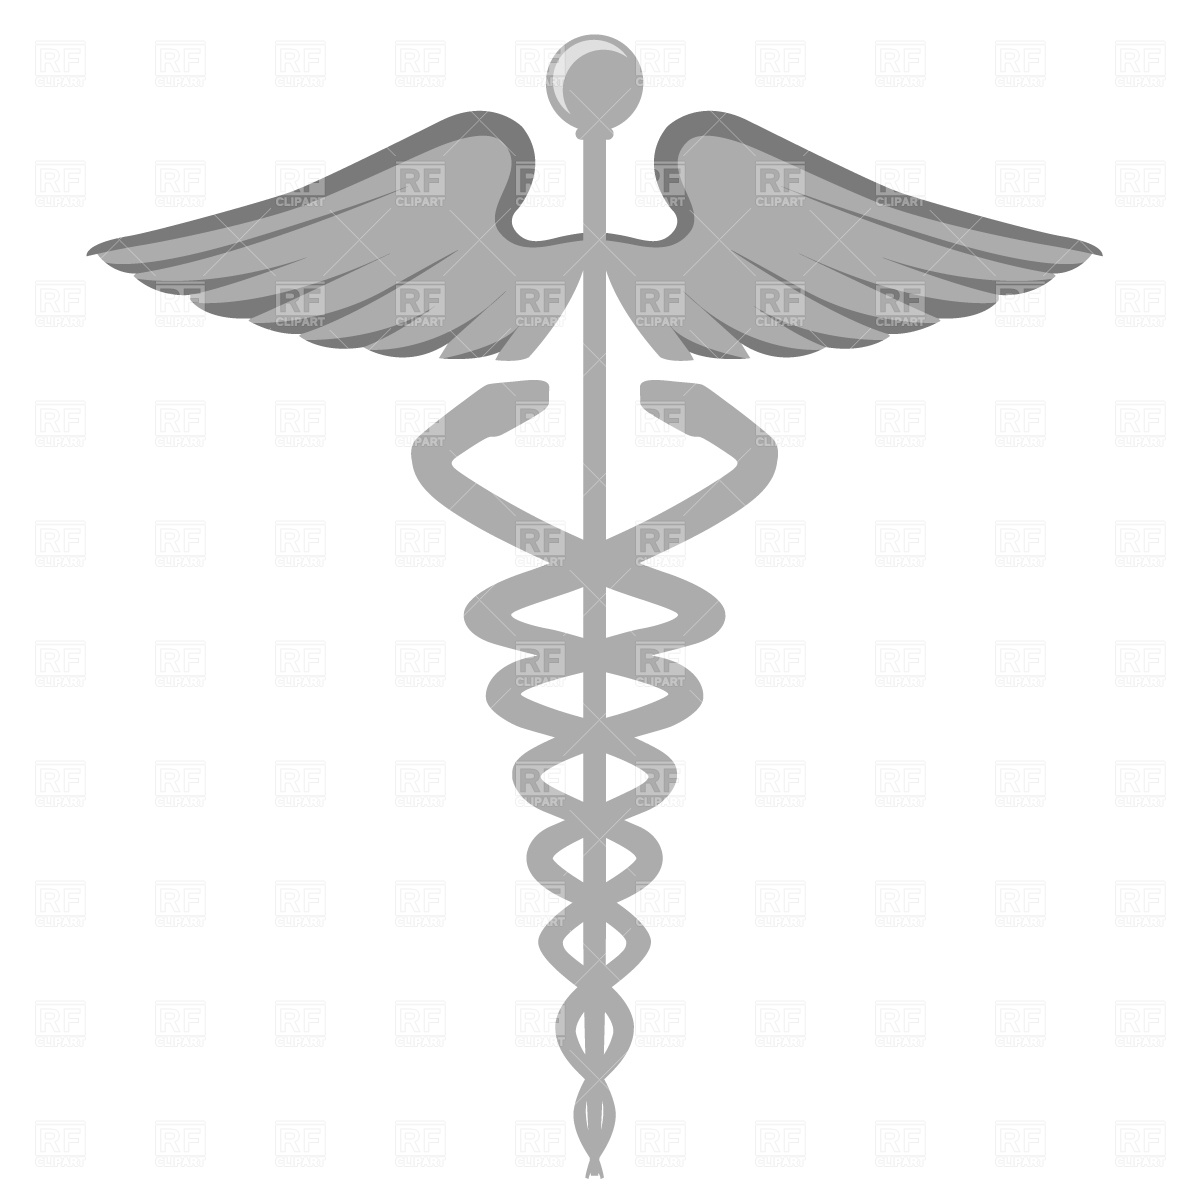 16 Medical Symbol Vector Images